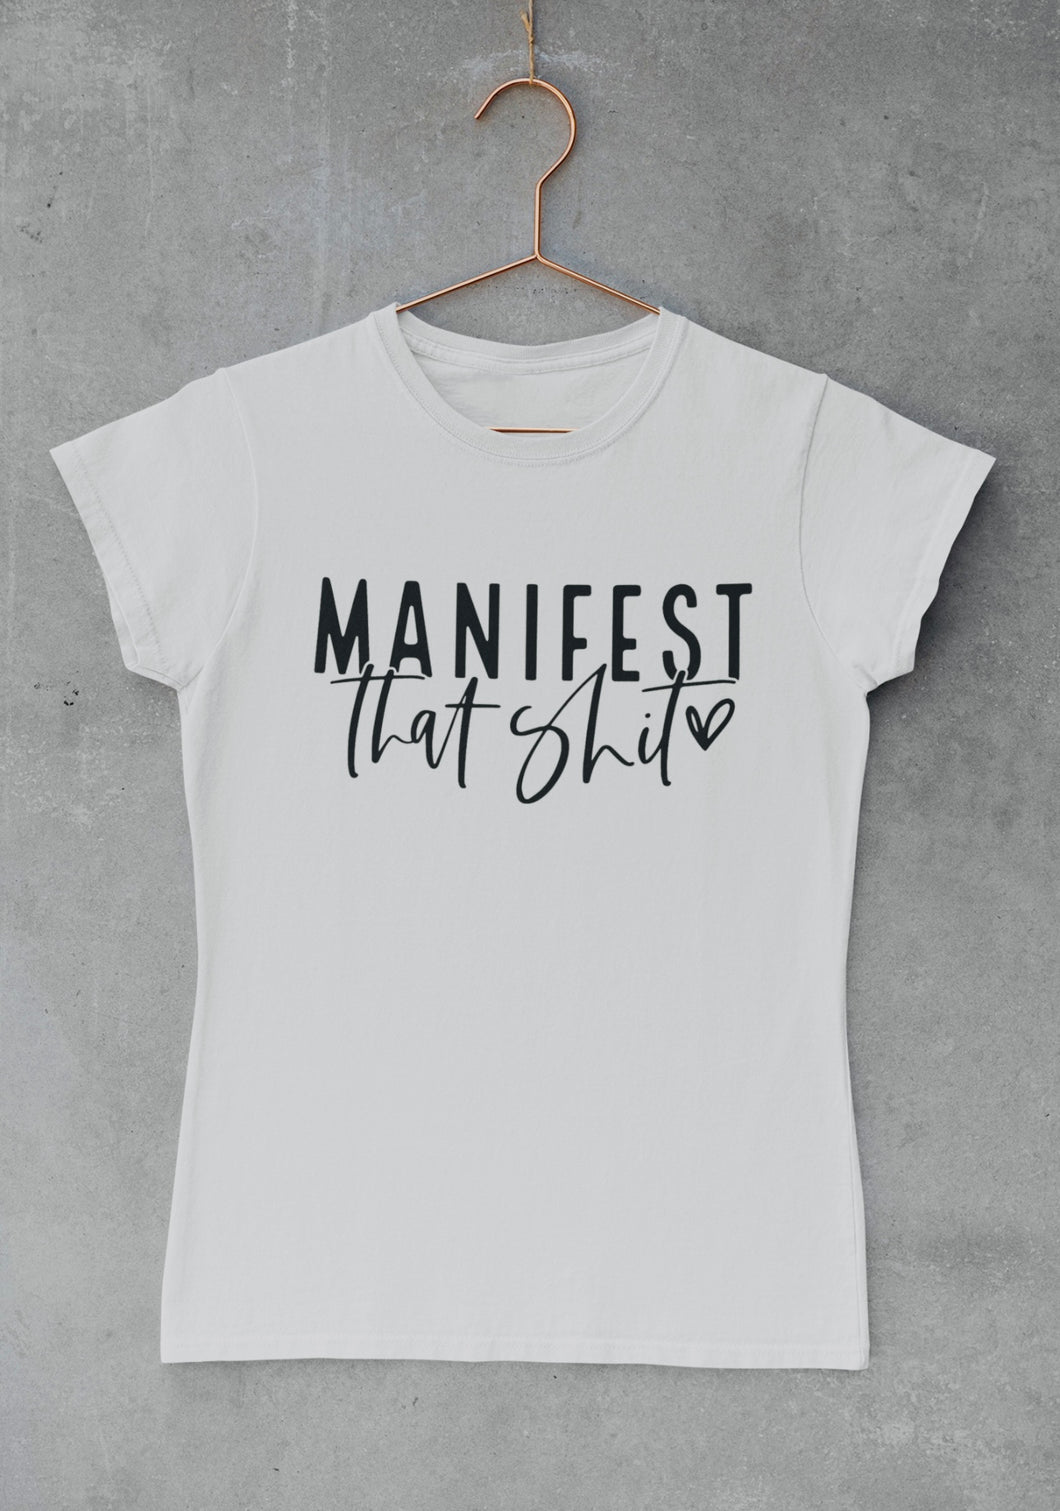 Manifest That Shit 🖤